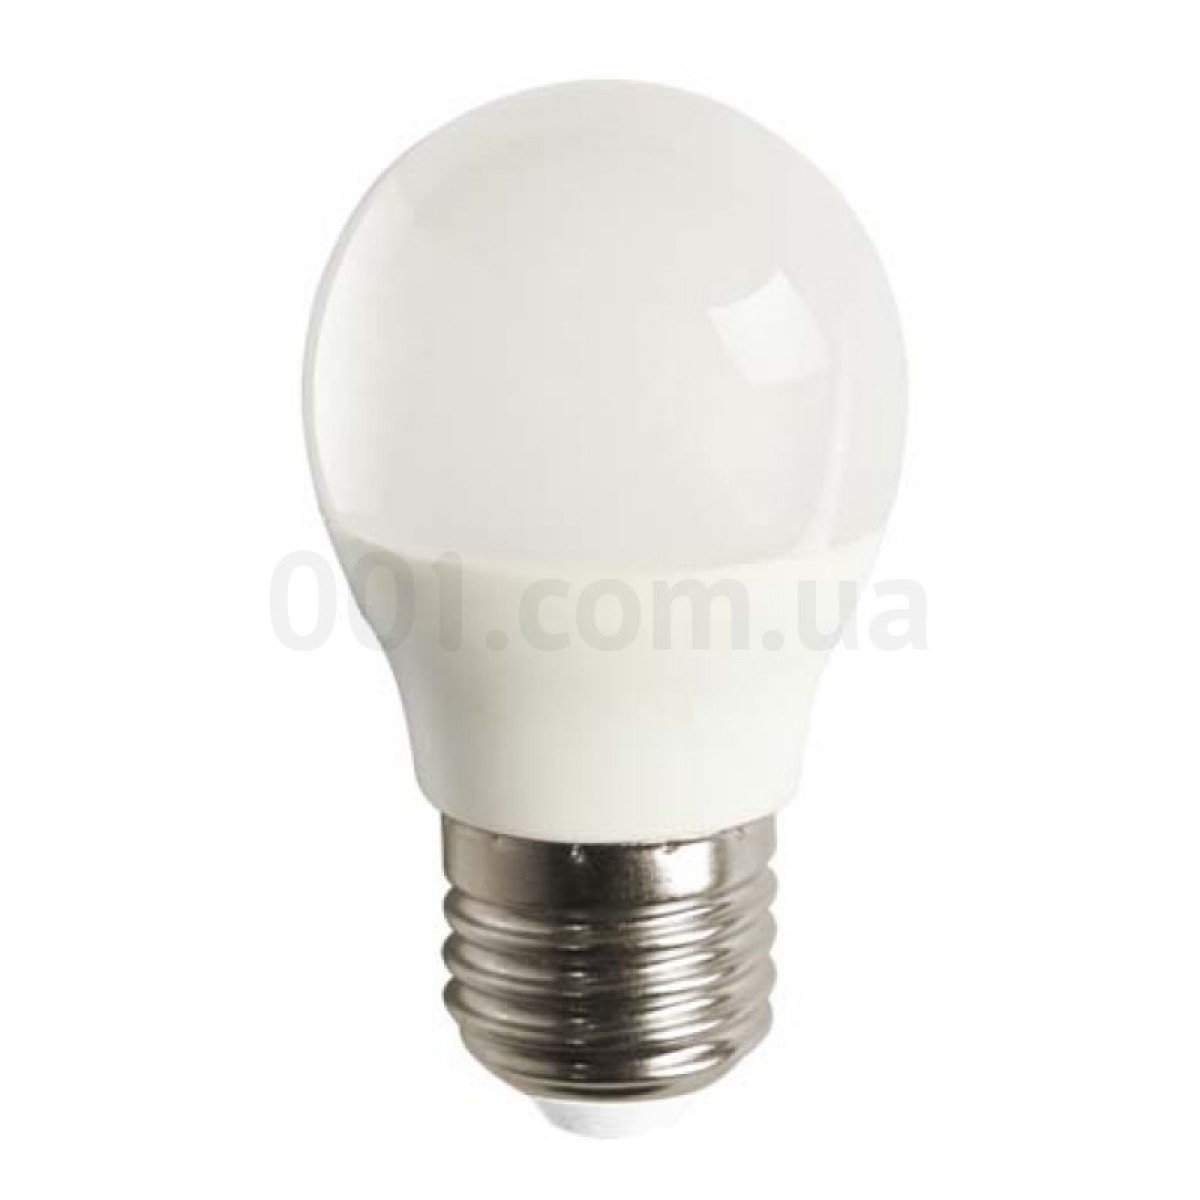 Светодиодная лампа LB-380 G45 (шар) 4Вт 4000K E27, Feron 98_98.jpg